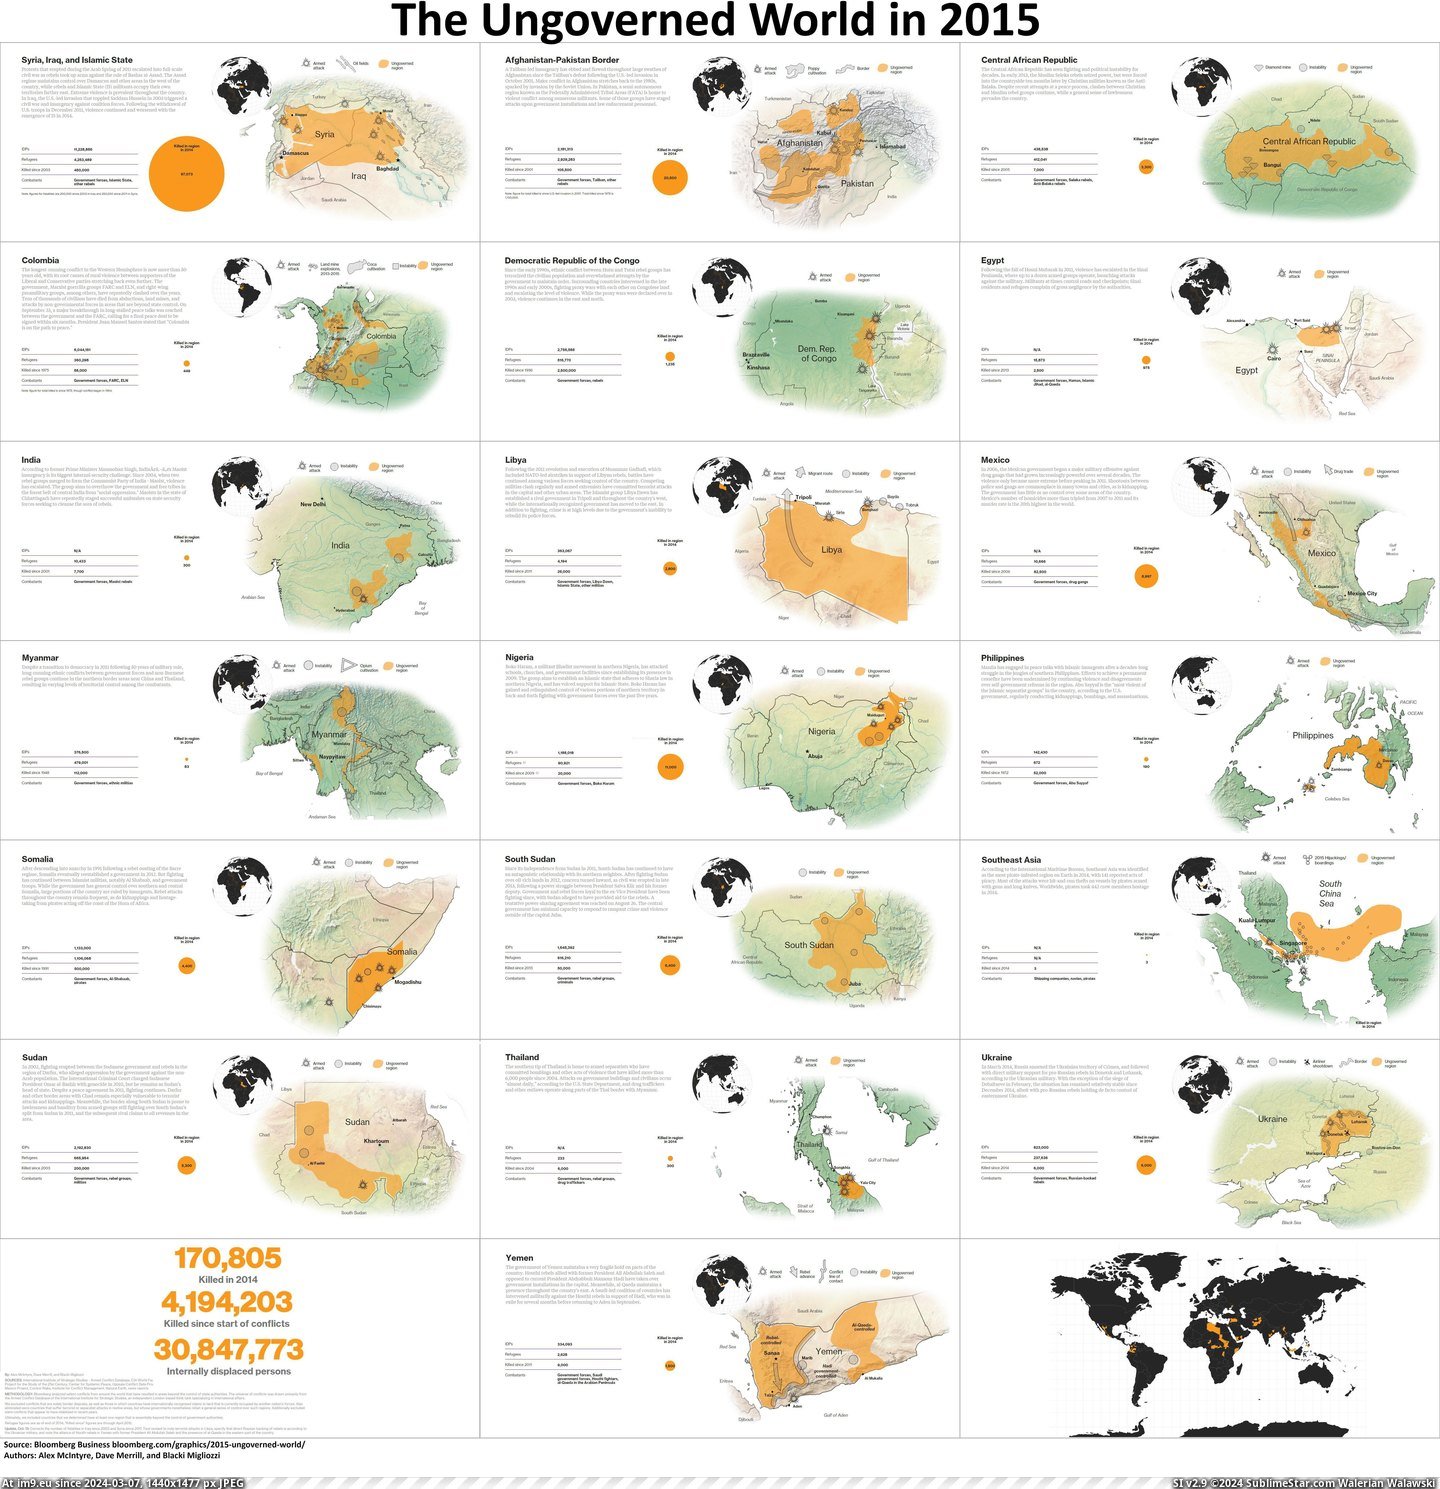  #World  [Mapporn] The Ungoverned World in 2015 [5707x5865] Pic. (Bild von album My r/MAPS favs))